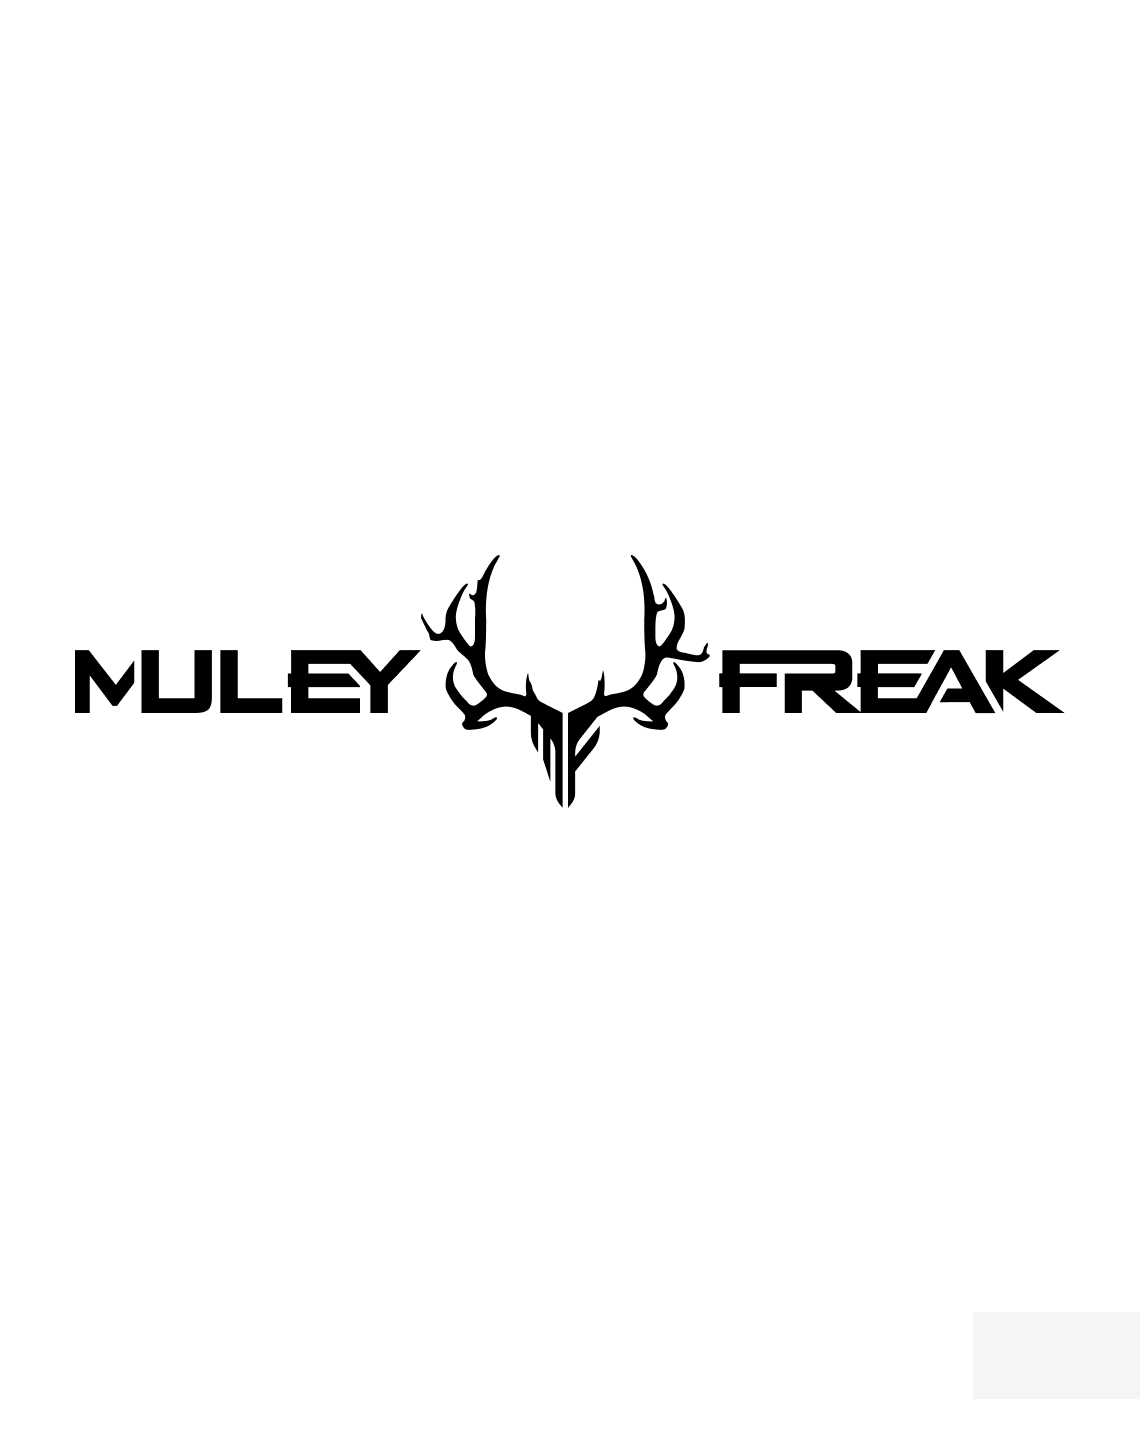 Muley Freak Stretched Decal - Muley Freak